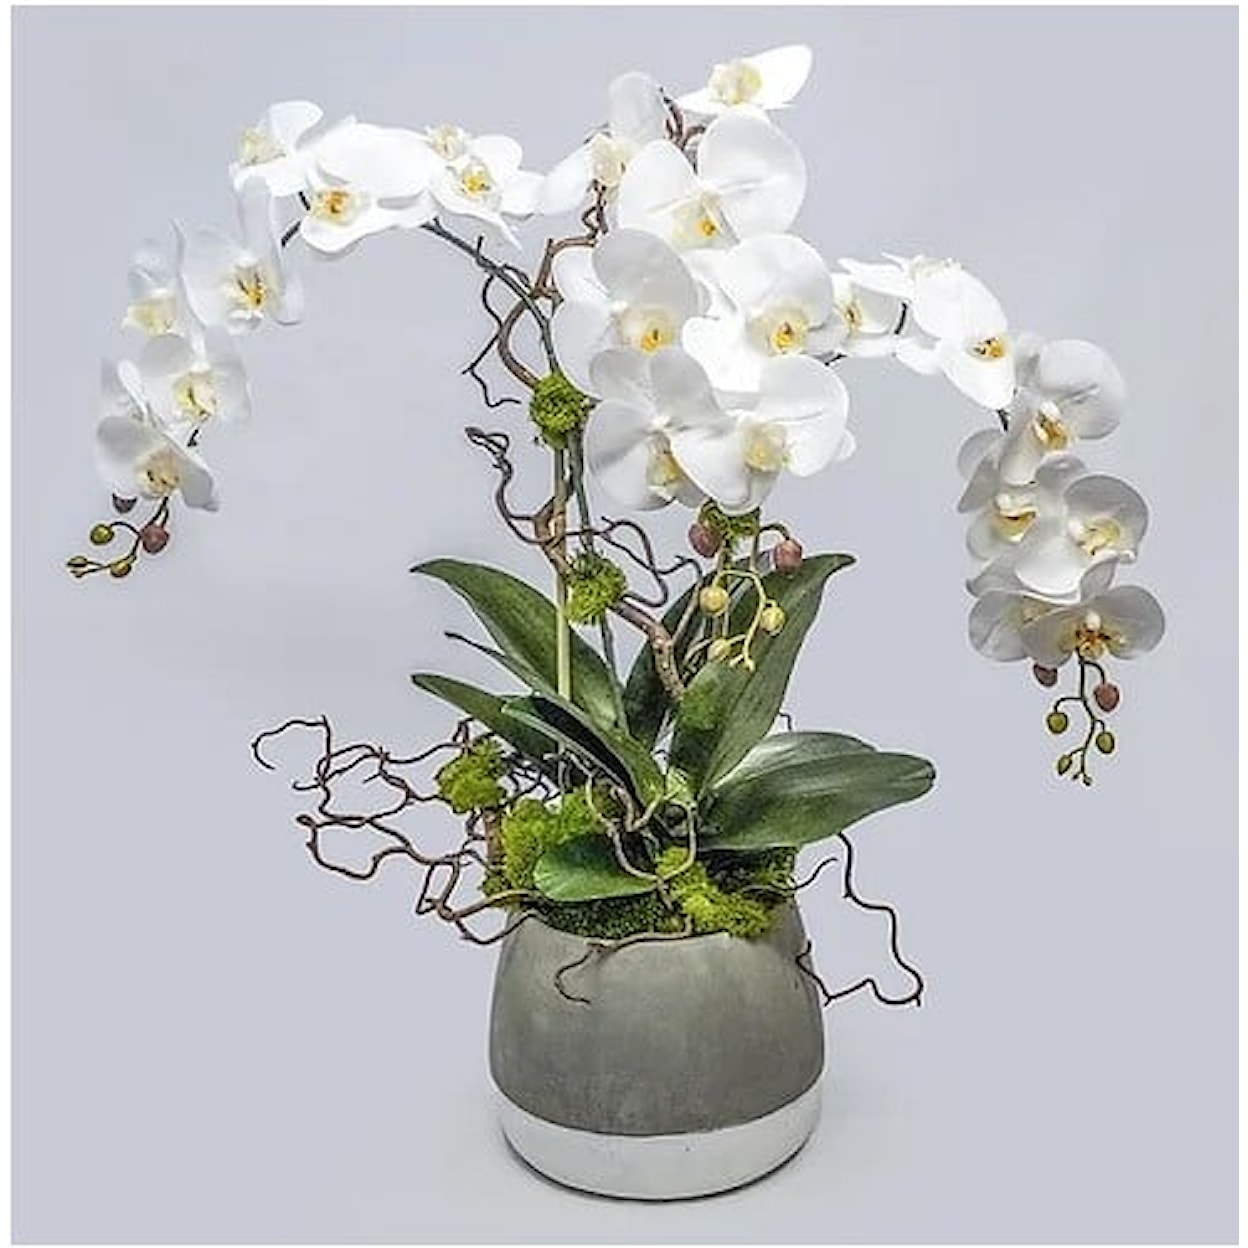 The Ivy Guild Orchids Ash Pot with Triple Orchids